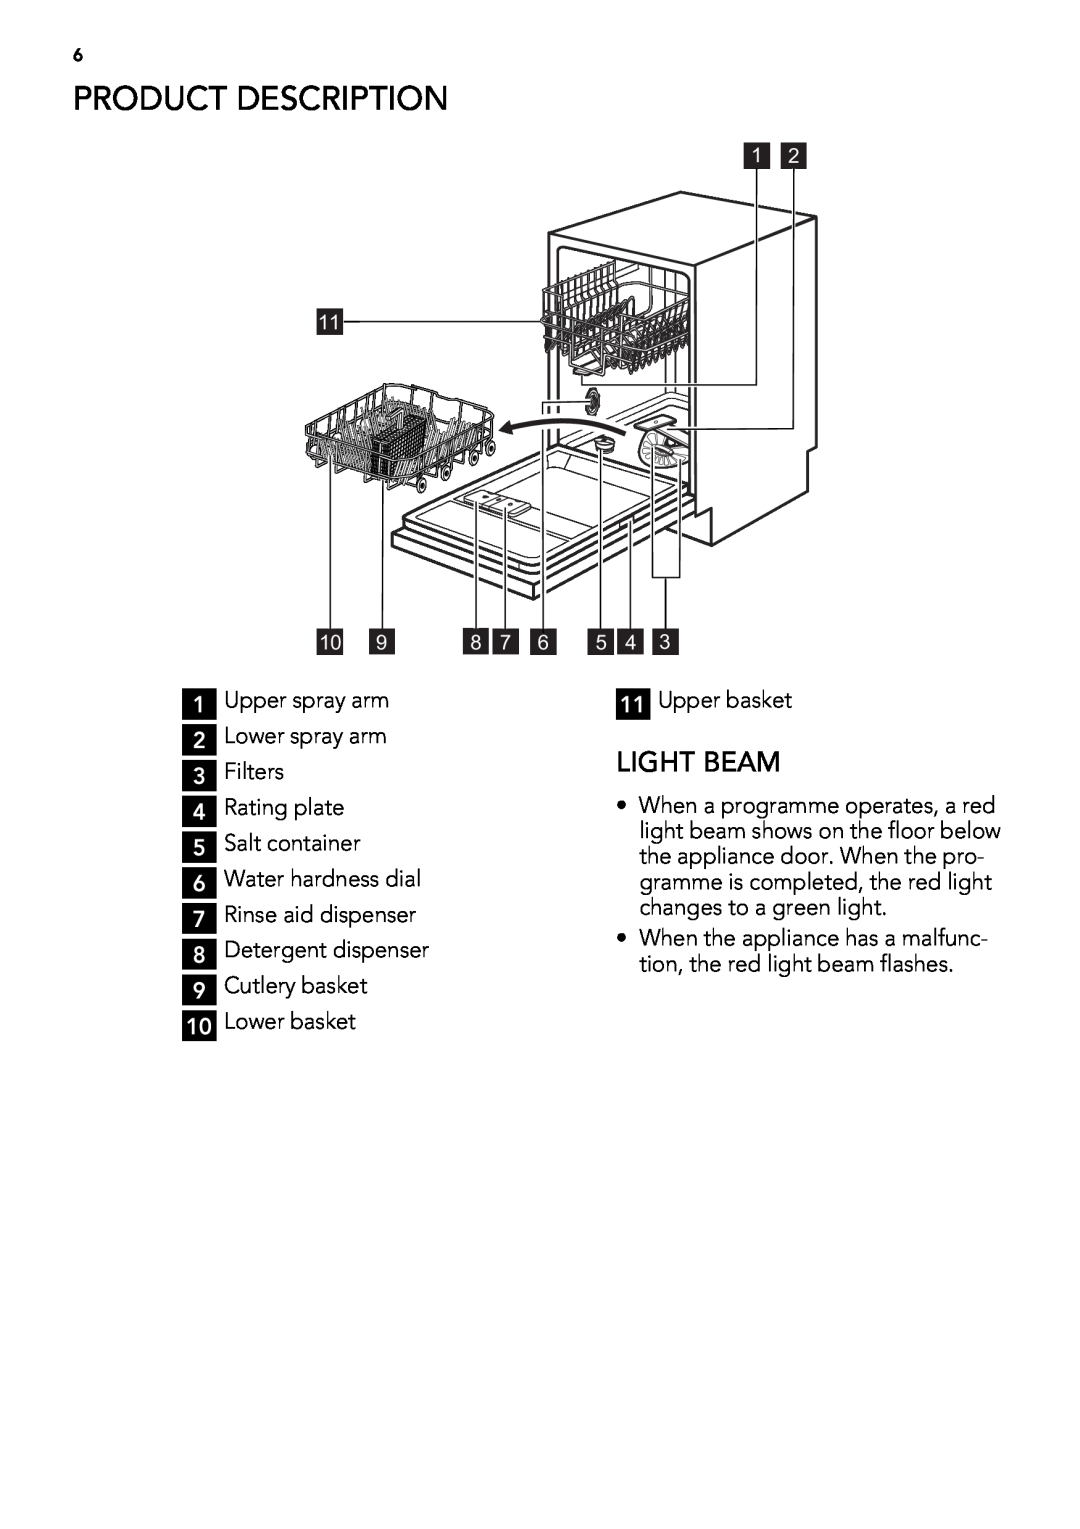 AEG 78400 VI user manual Product Description, Light Beam 